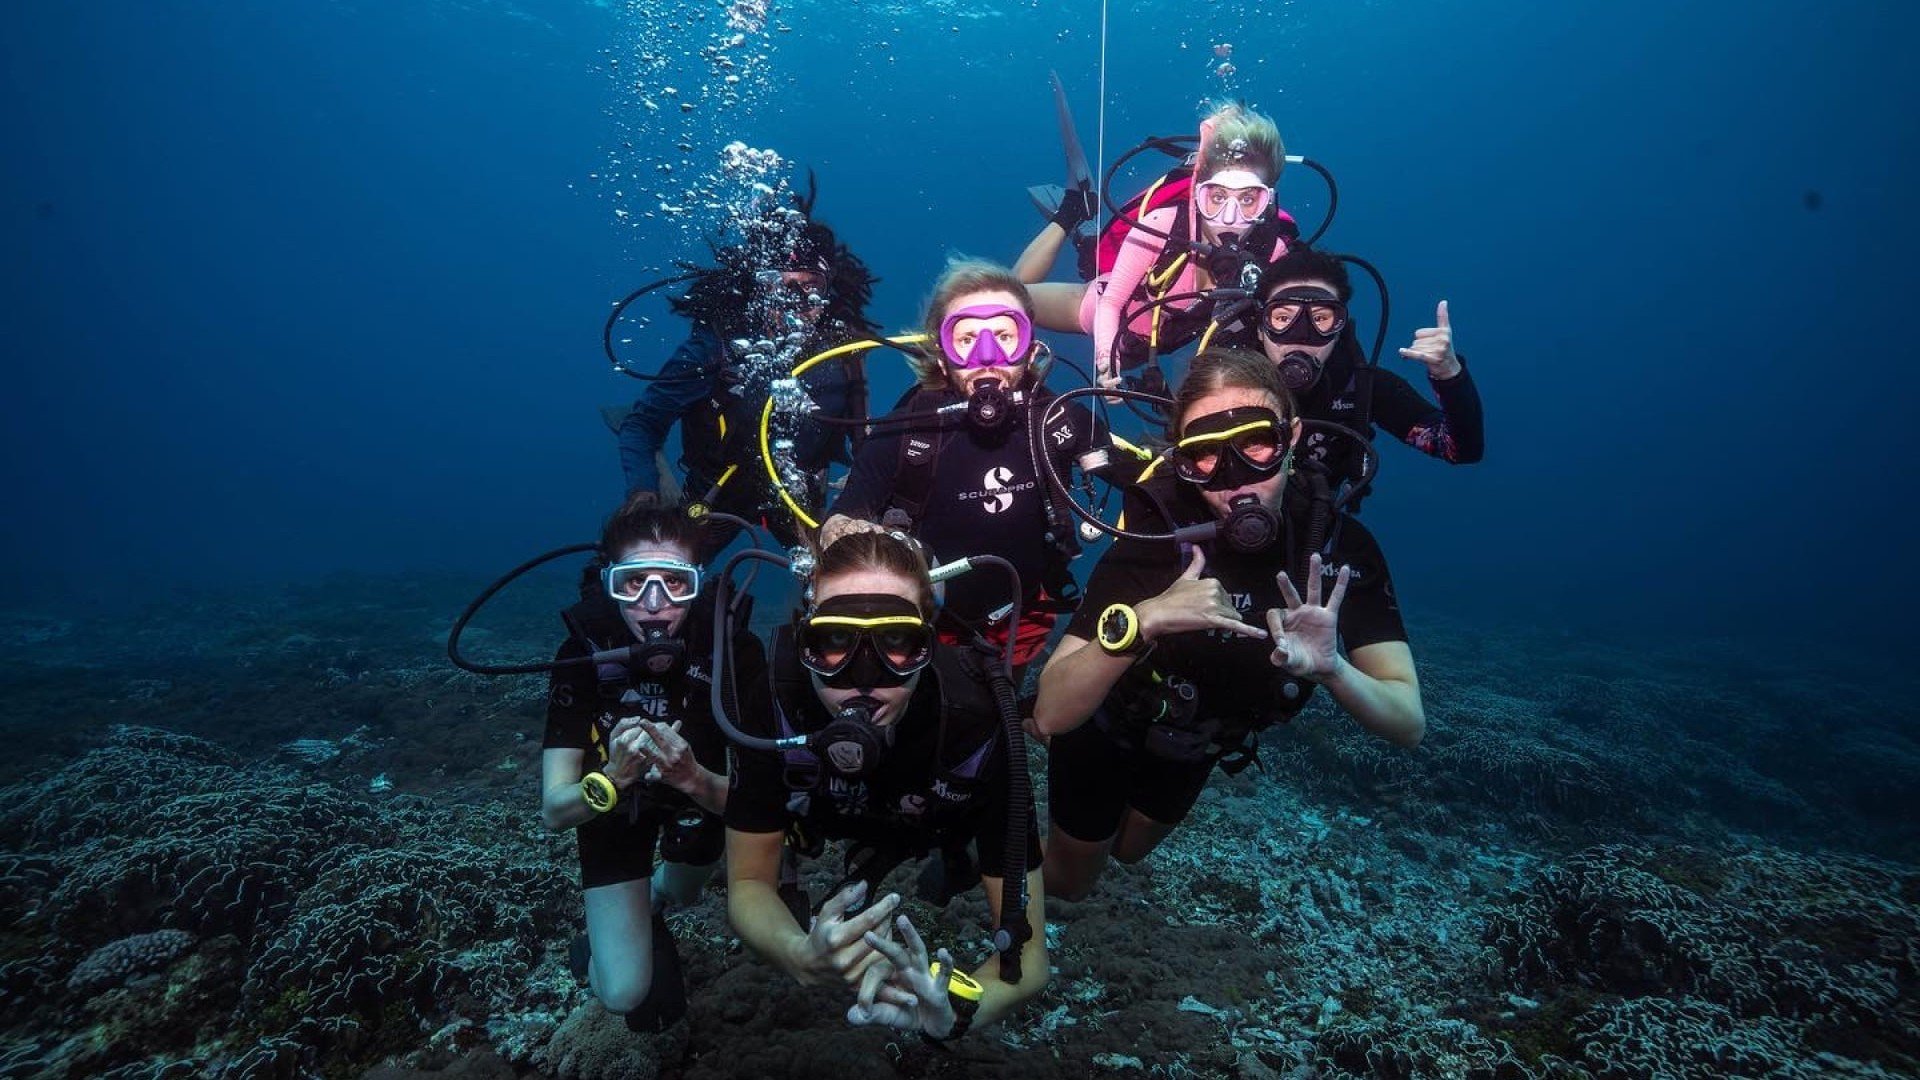 group photo on the reef gili islands